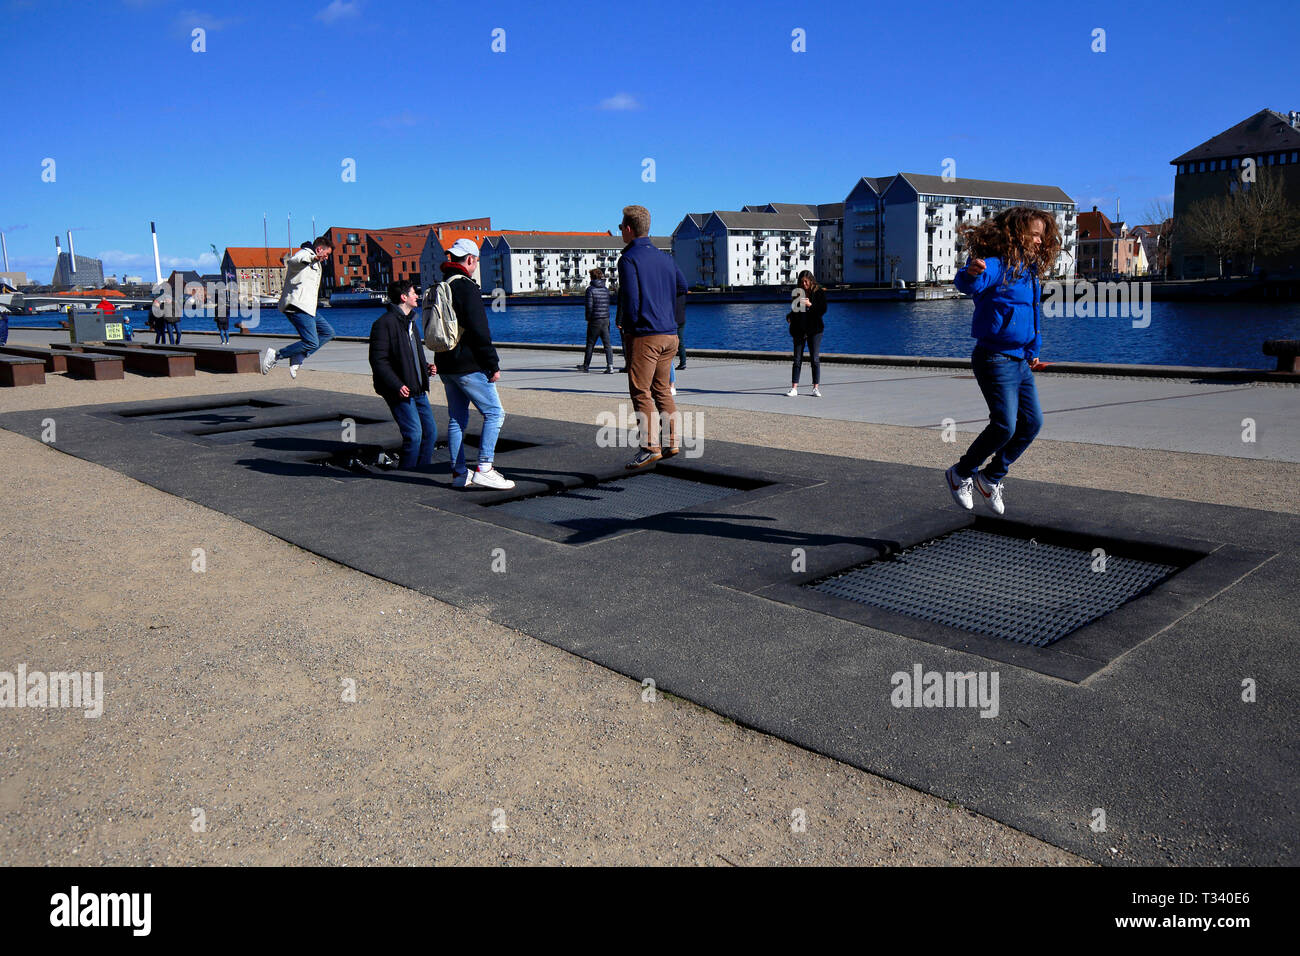 People on trampolines in Havnepromenade, Copenhagen, Denmark Stock Photo -